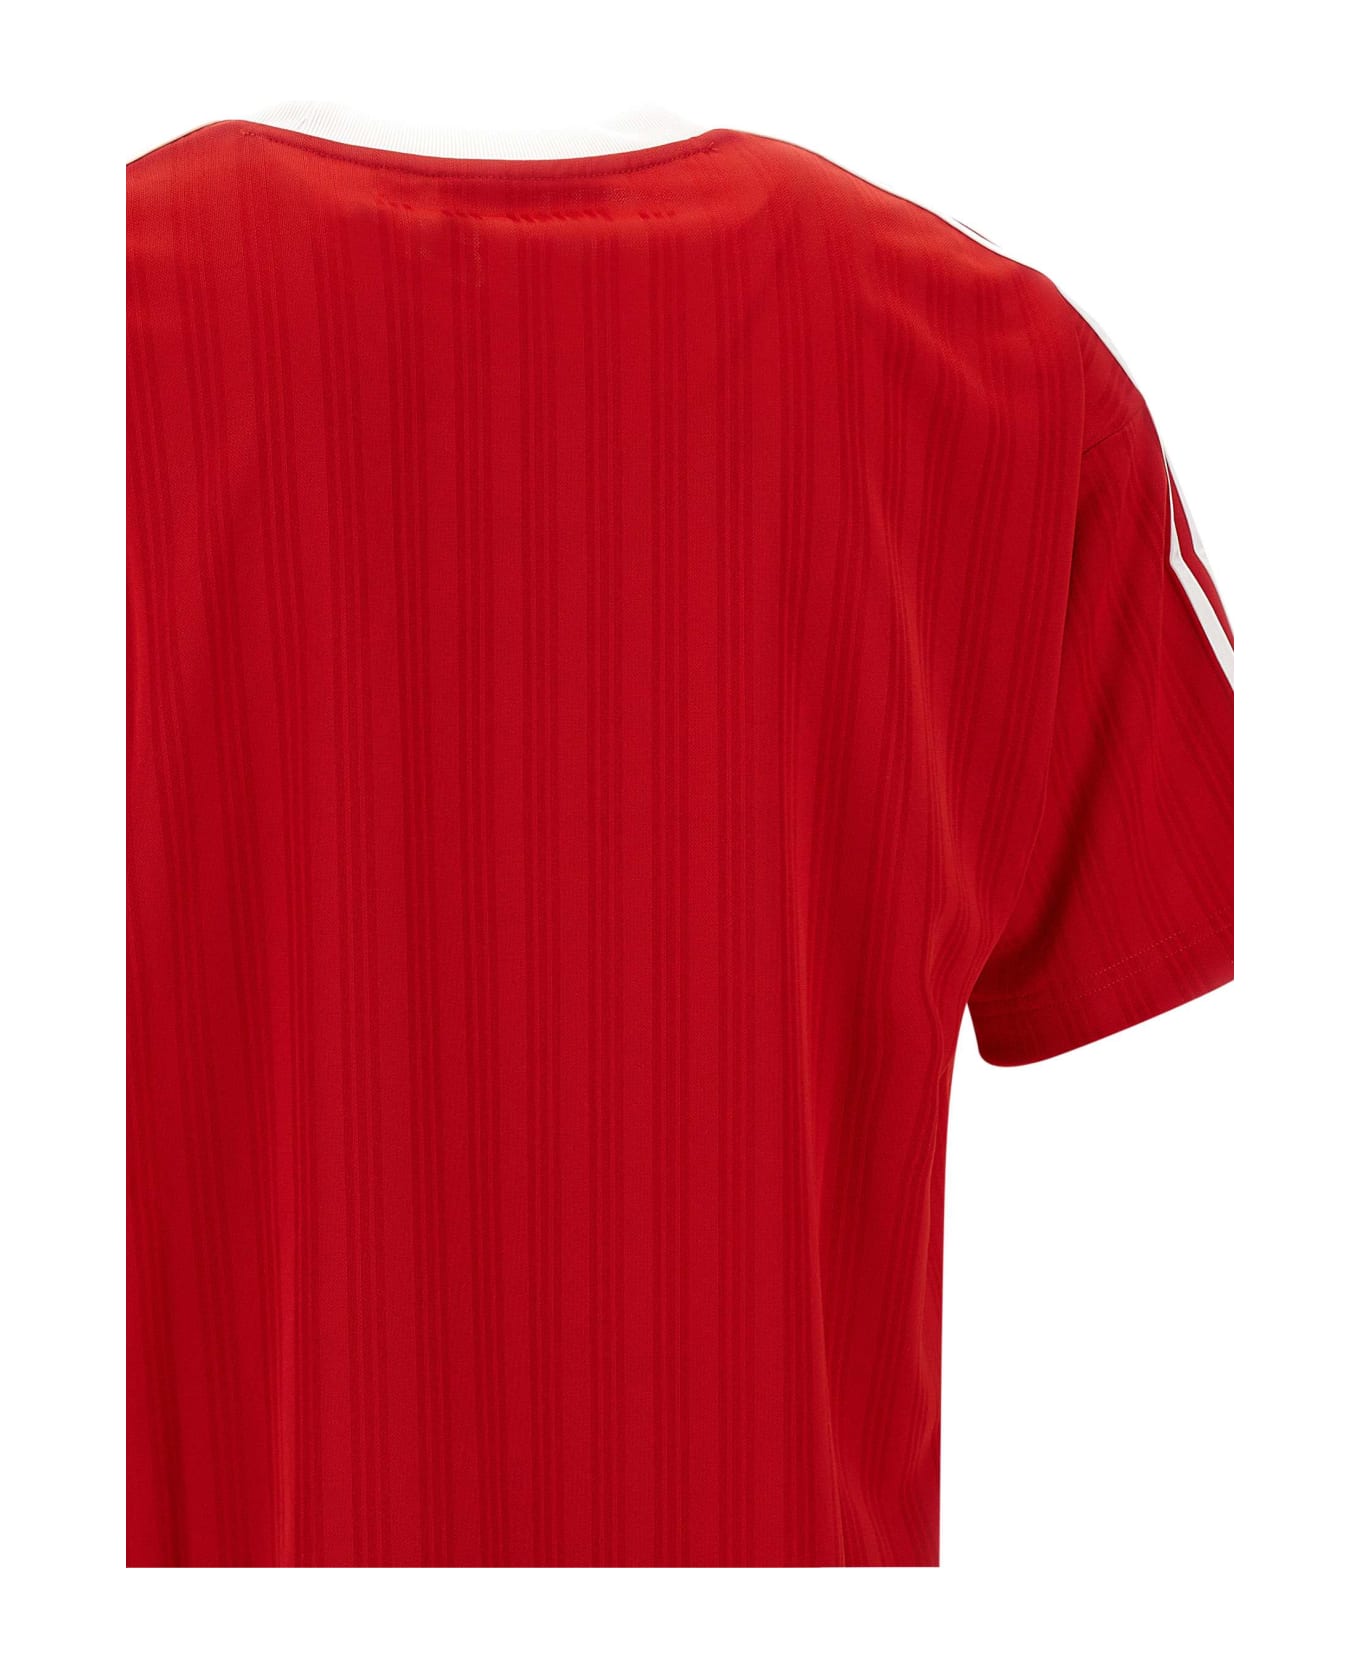 Adidas 'adicolor' Jacquard Fabric T-shirt - RED